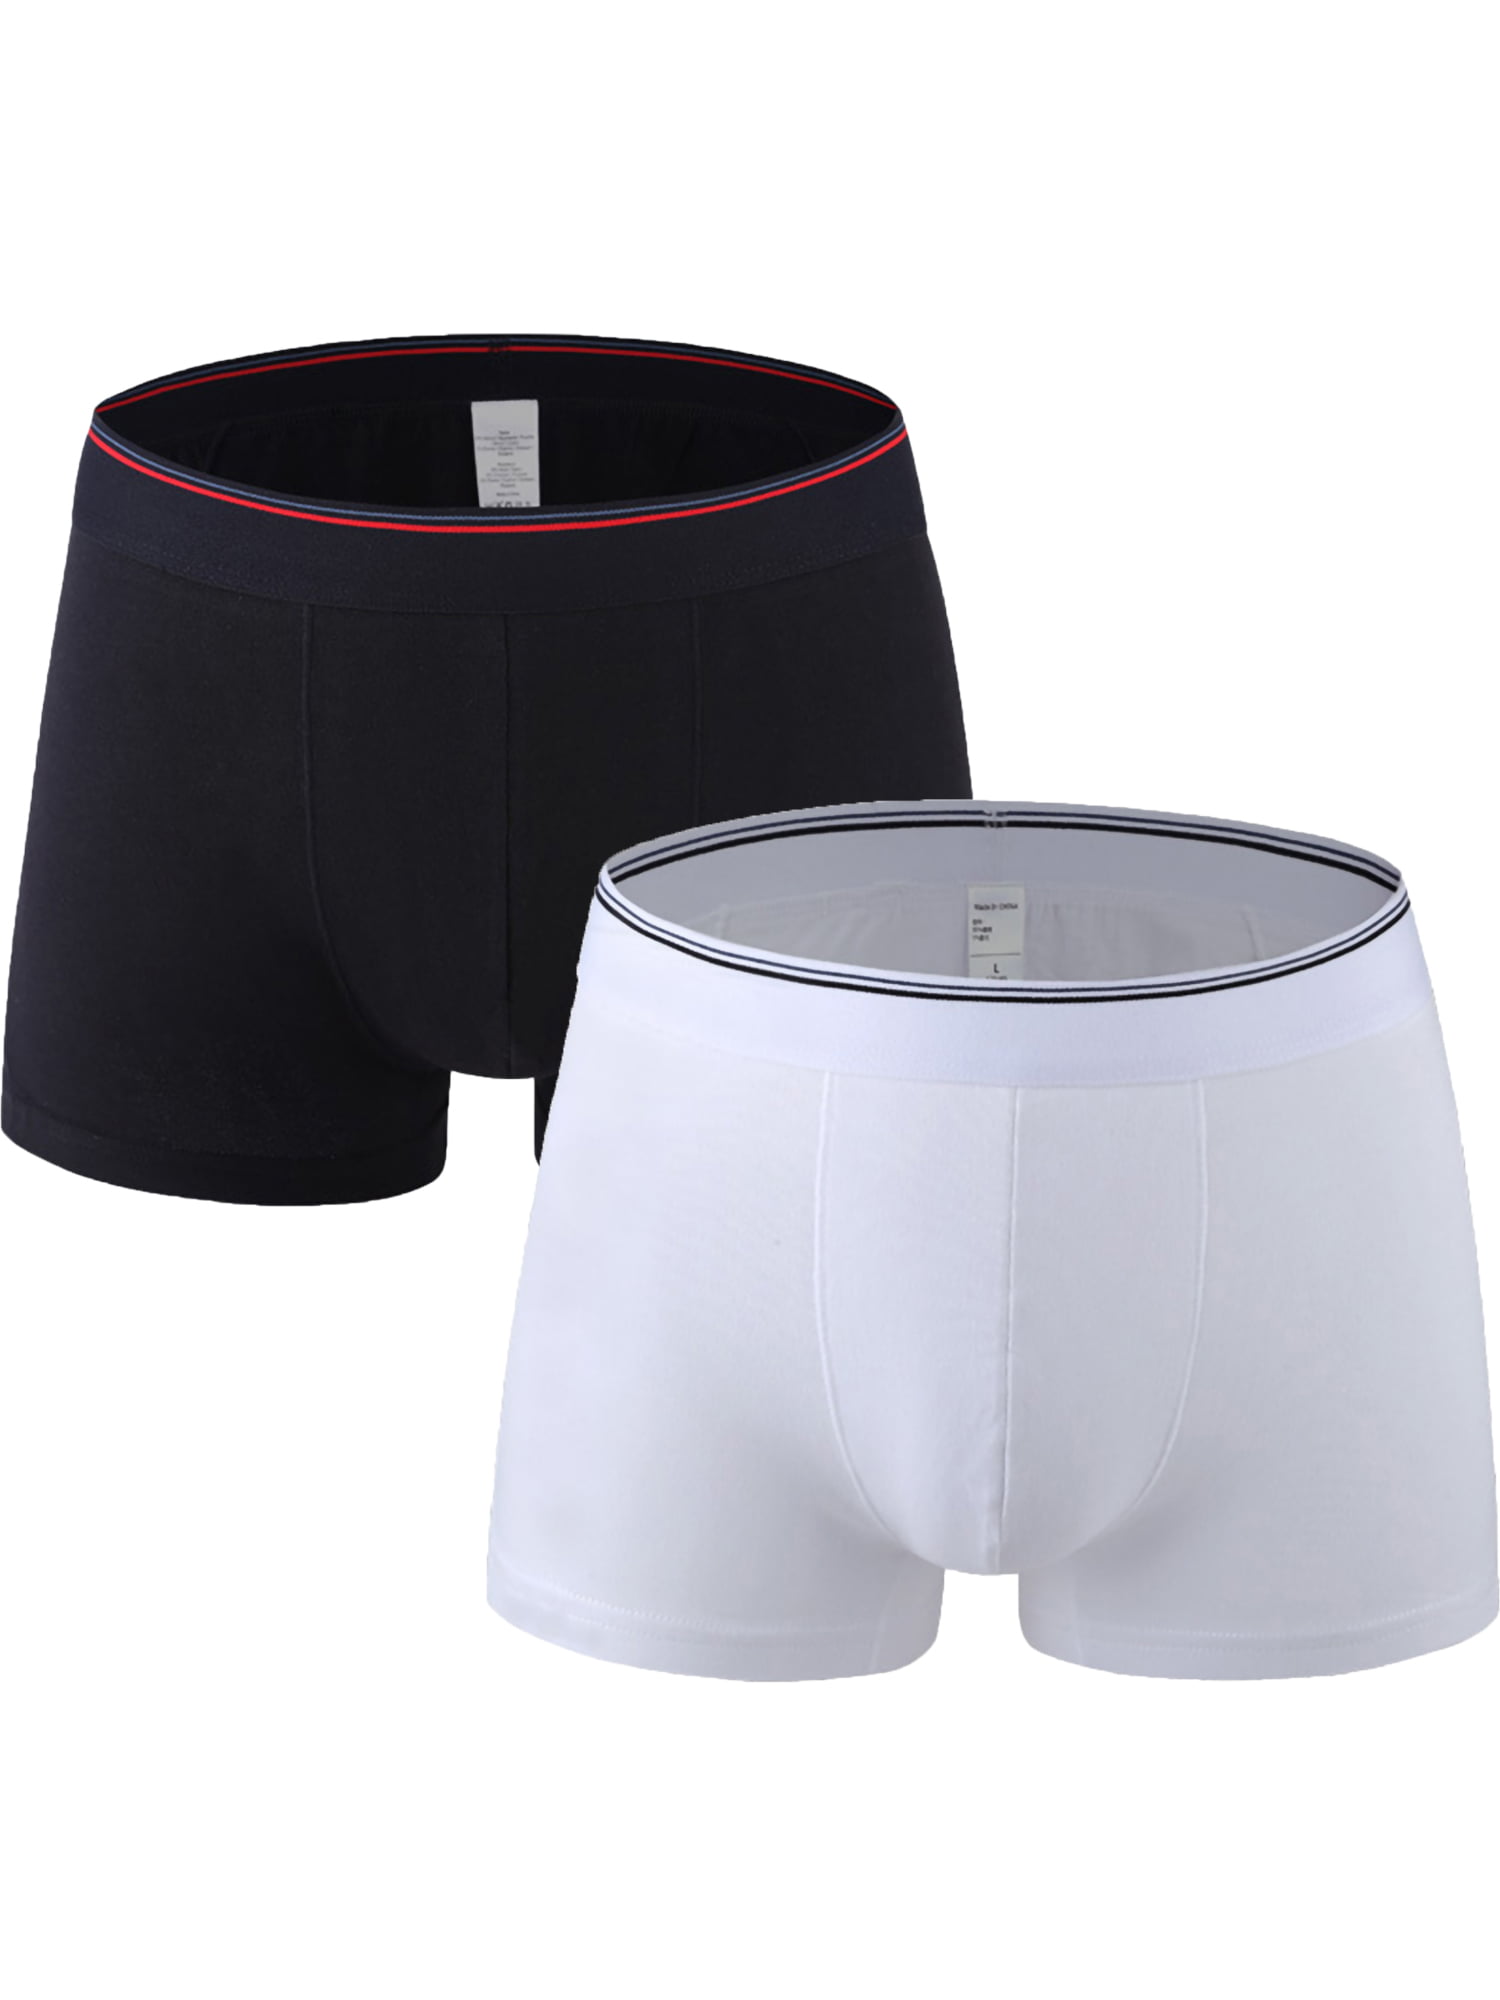 Avamo Mens Plus Size Underwear Cotton Boxer Briefs Trunks Big and Tall ...